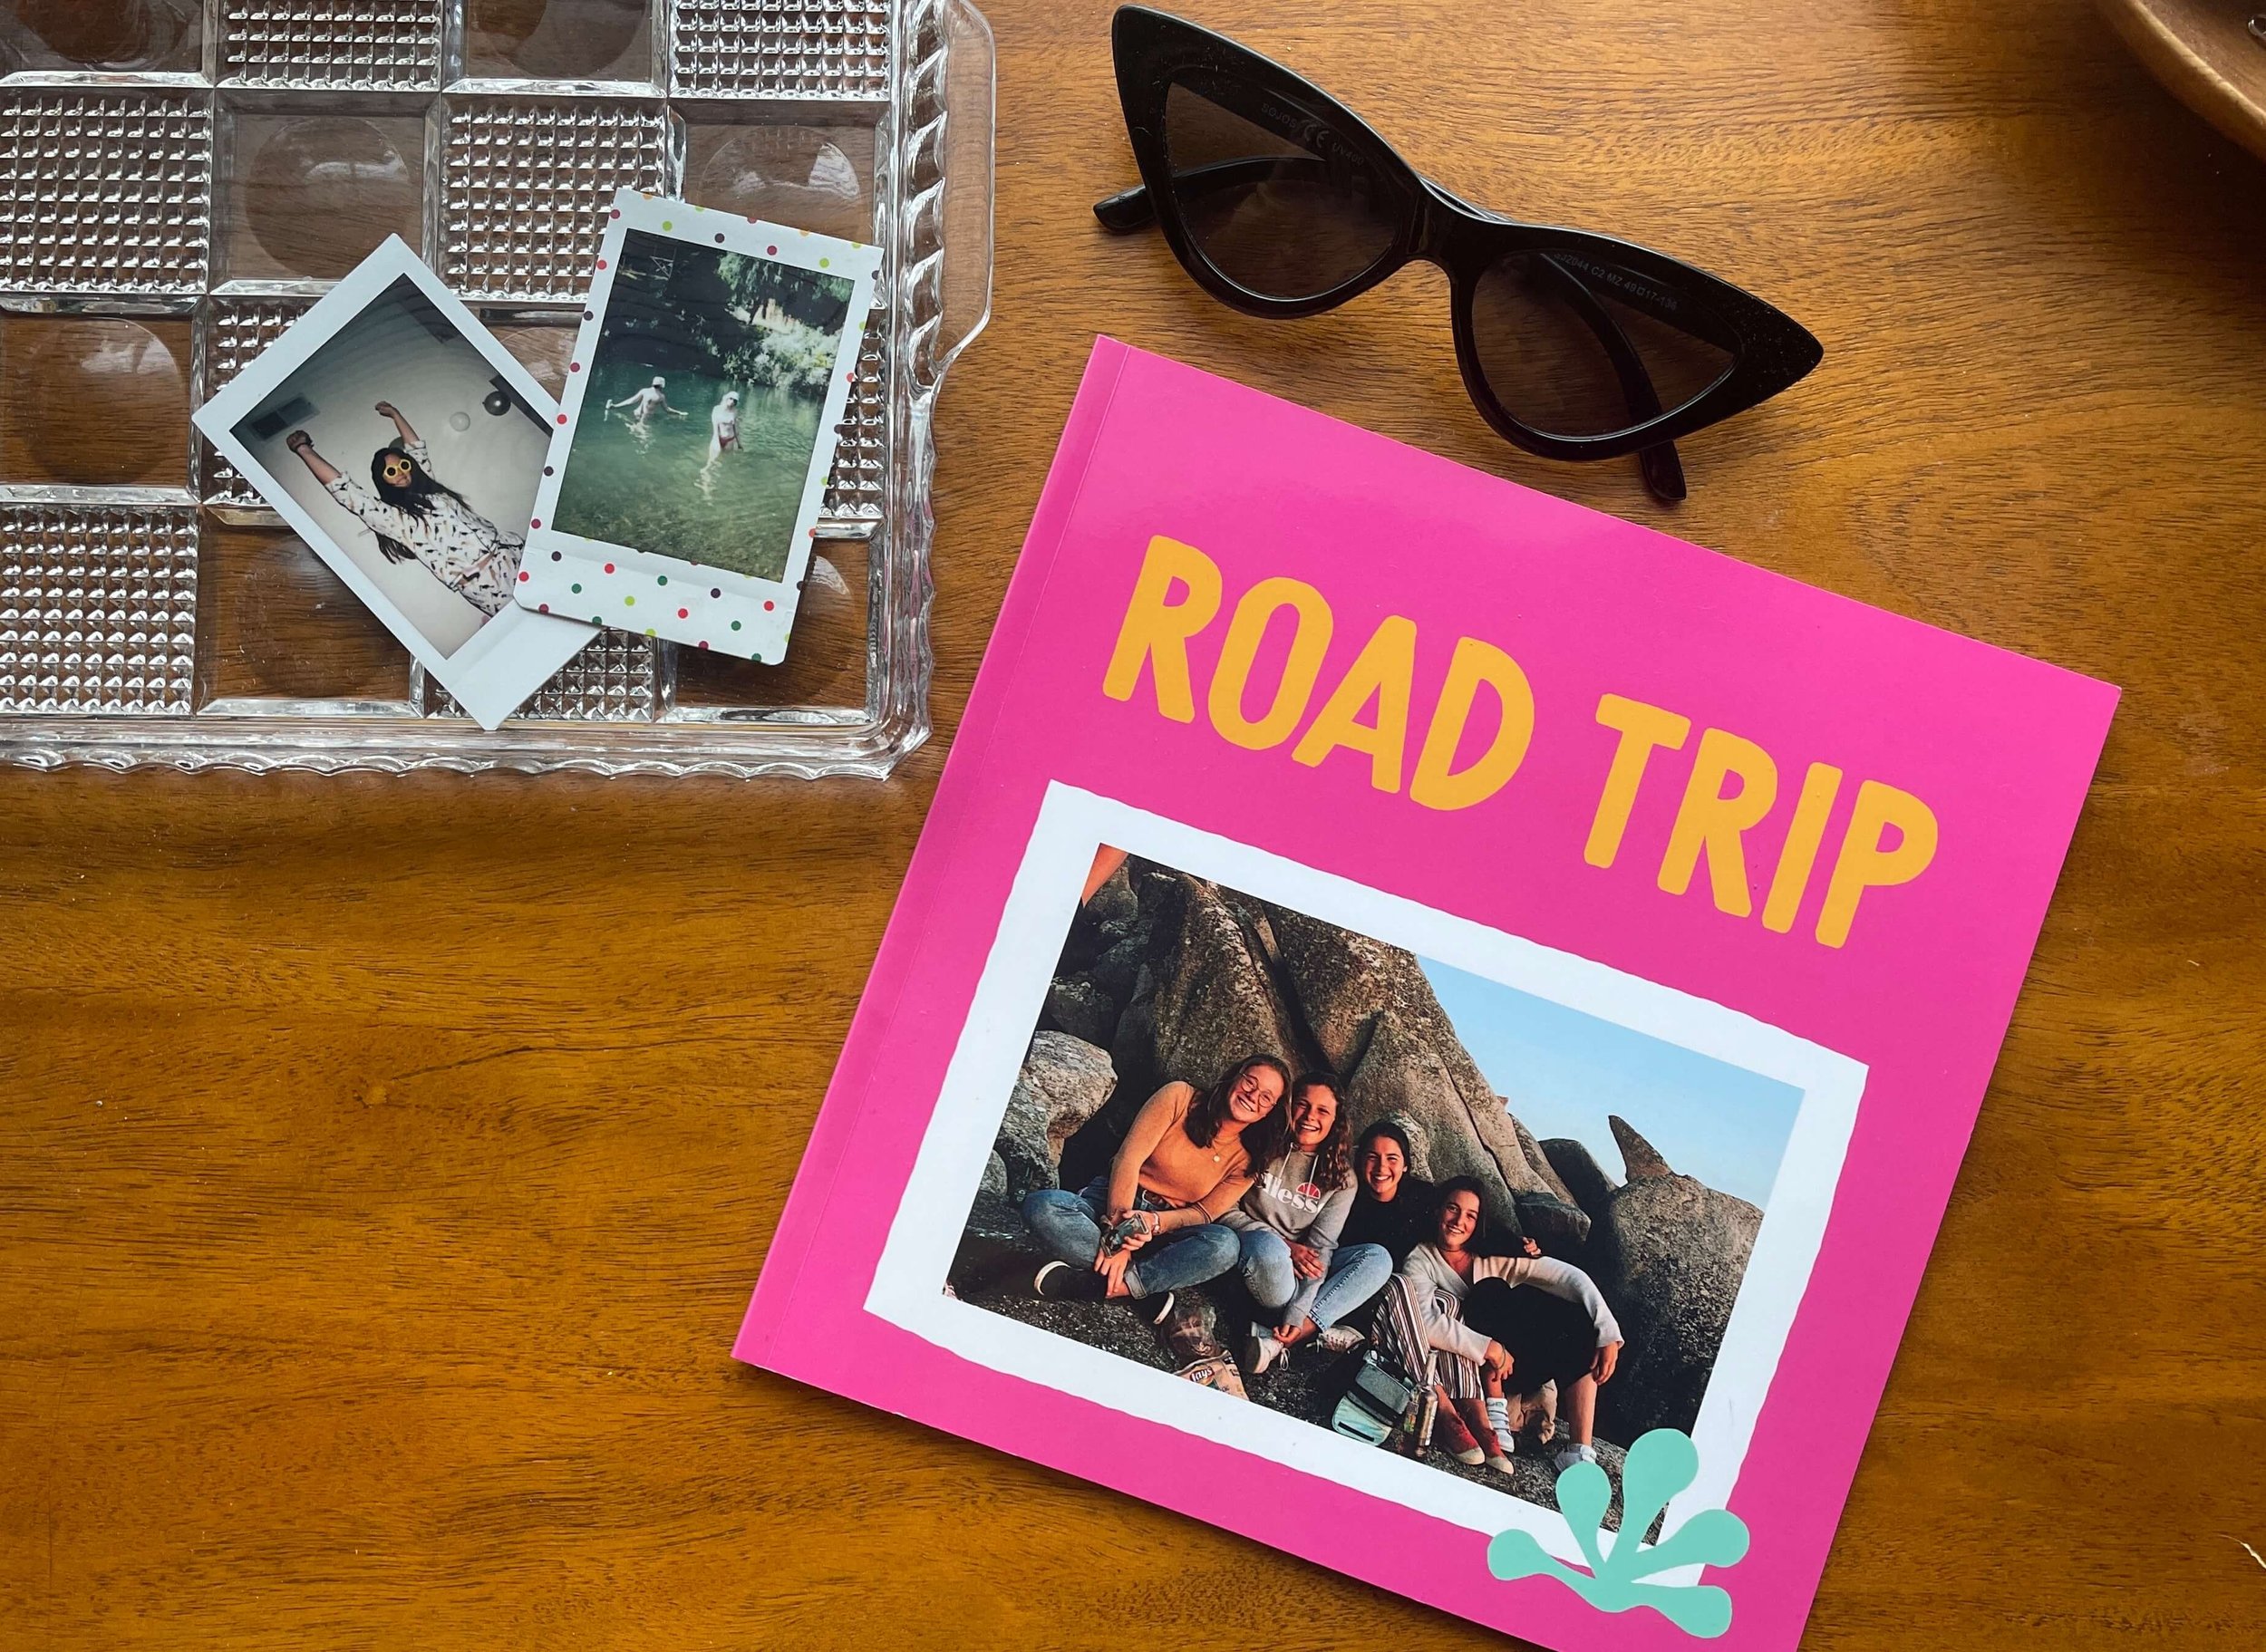 How to Make Beautiful Travel Photo Books — Mixbook Inspiration